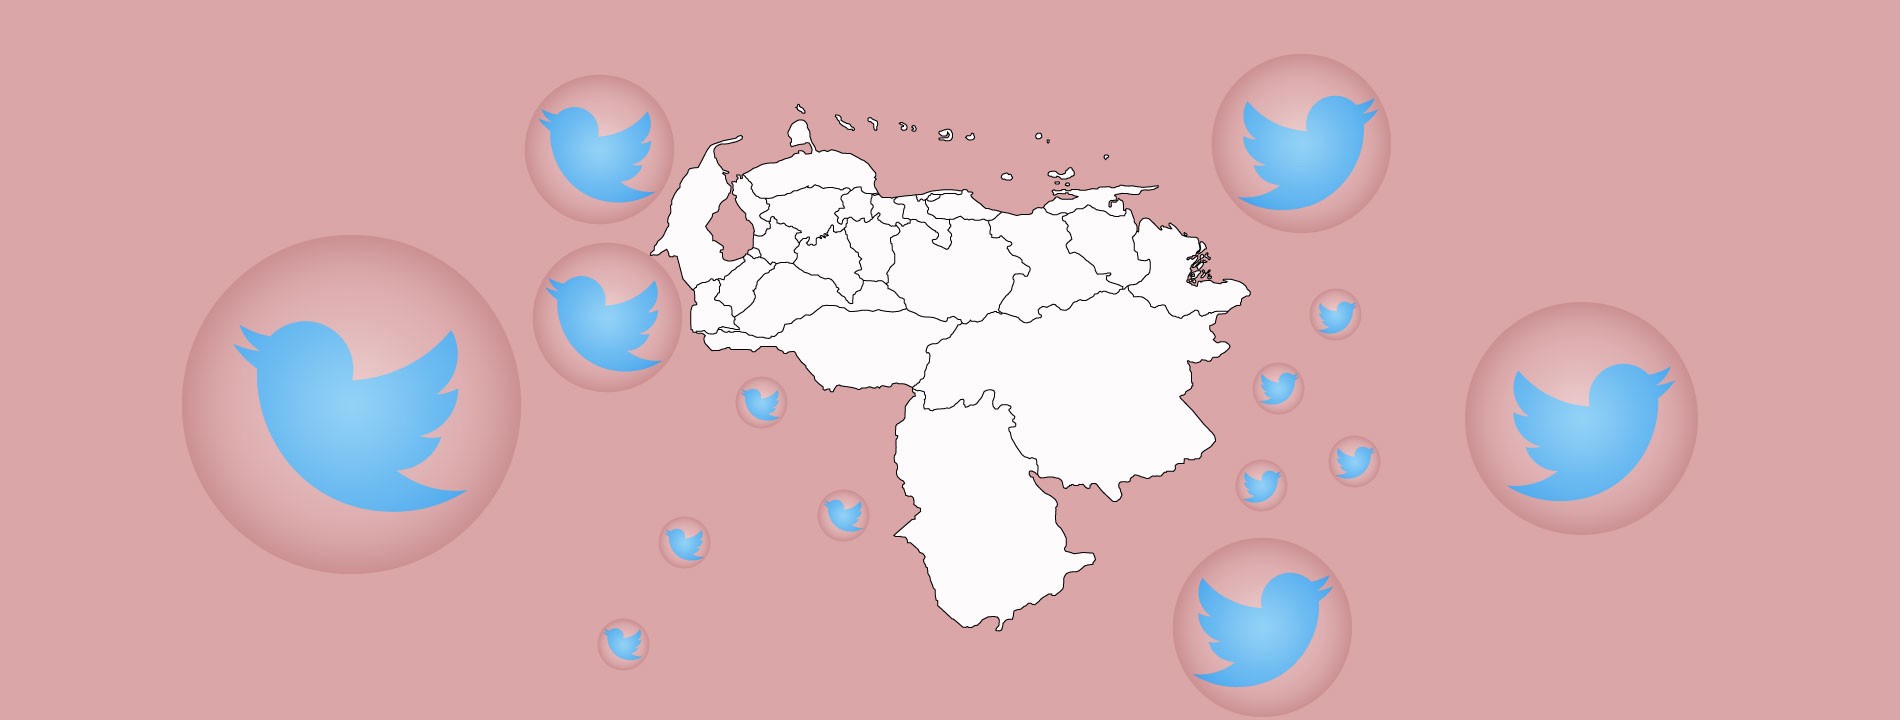 #TrollTracker: Venezuelan Government-linked Influence Campaign on Twitter